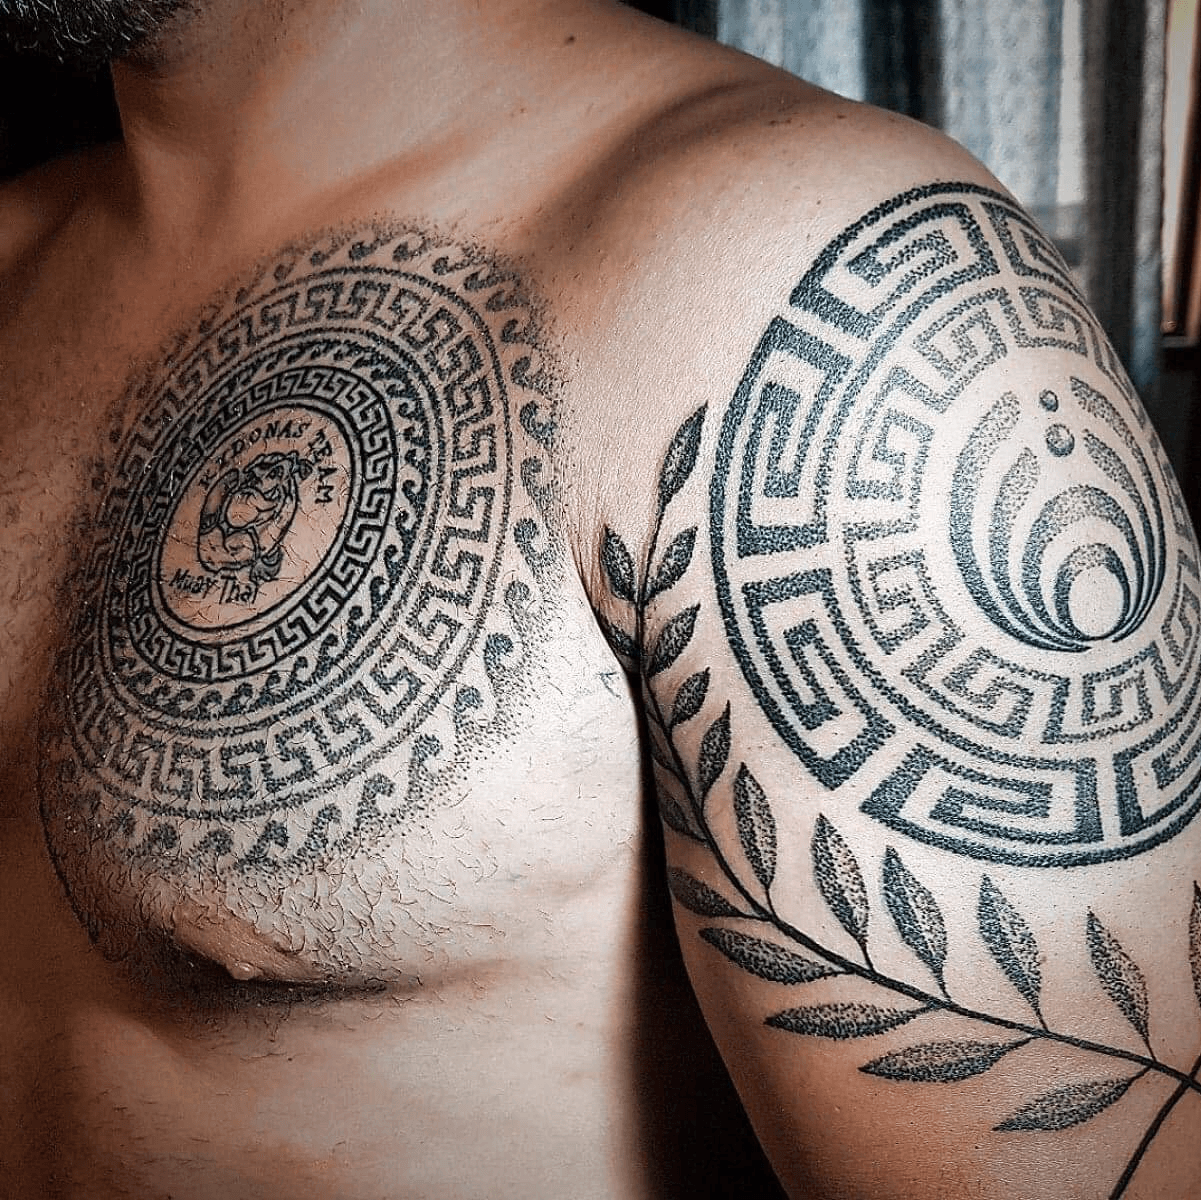 Image Details ISS_9788_02808 - polynesian tattoo indigenous primitive art .  vector black monochrome ink hand drawn native polynesian folk art symbols  Tiki, tapa flower, Enata, fish hook, Puahitu, compass, moray eel, Kena